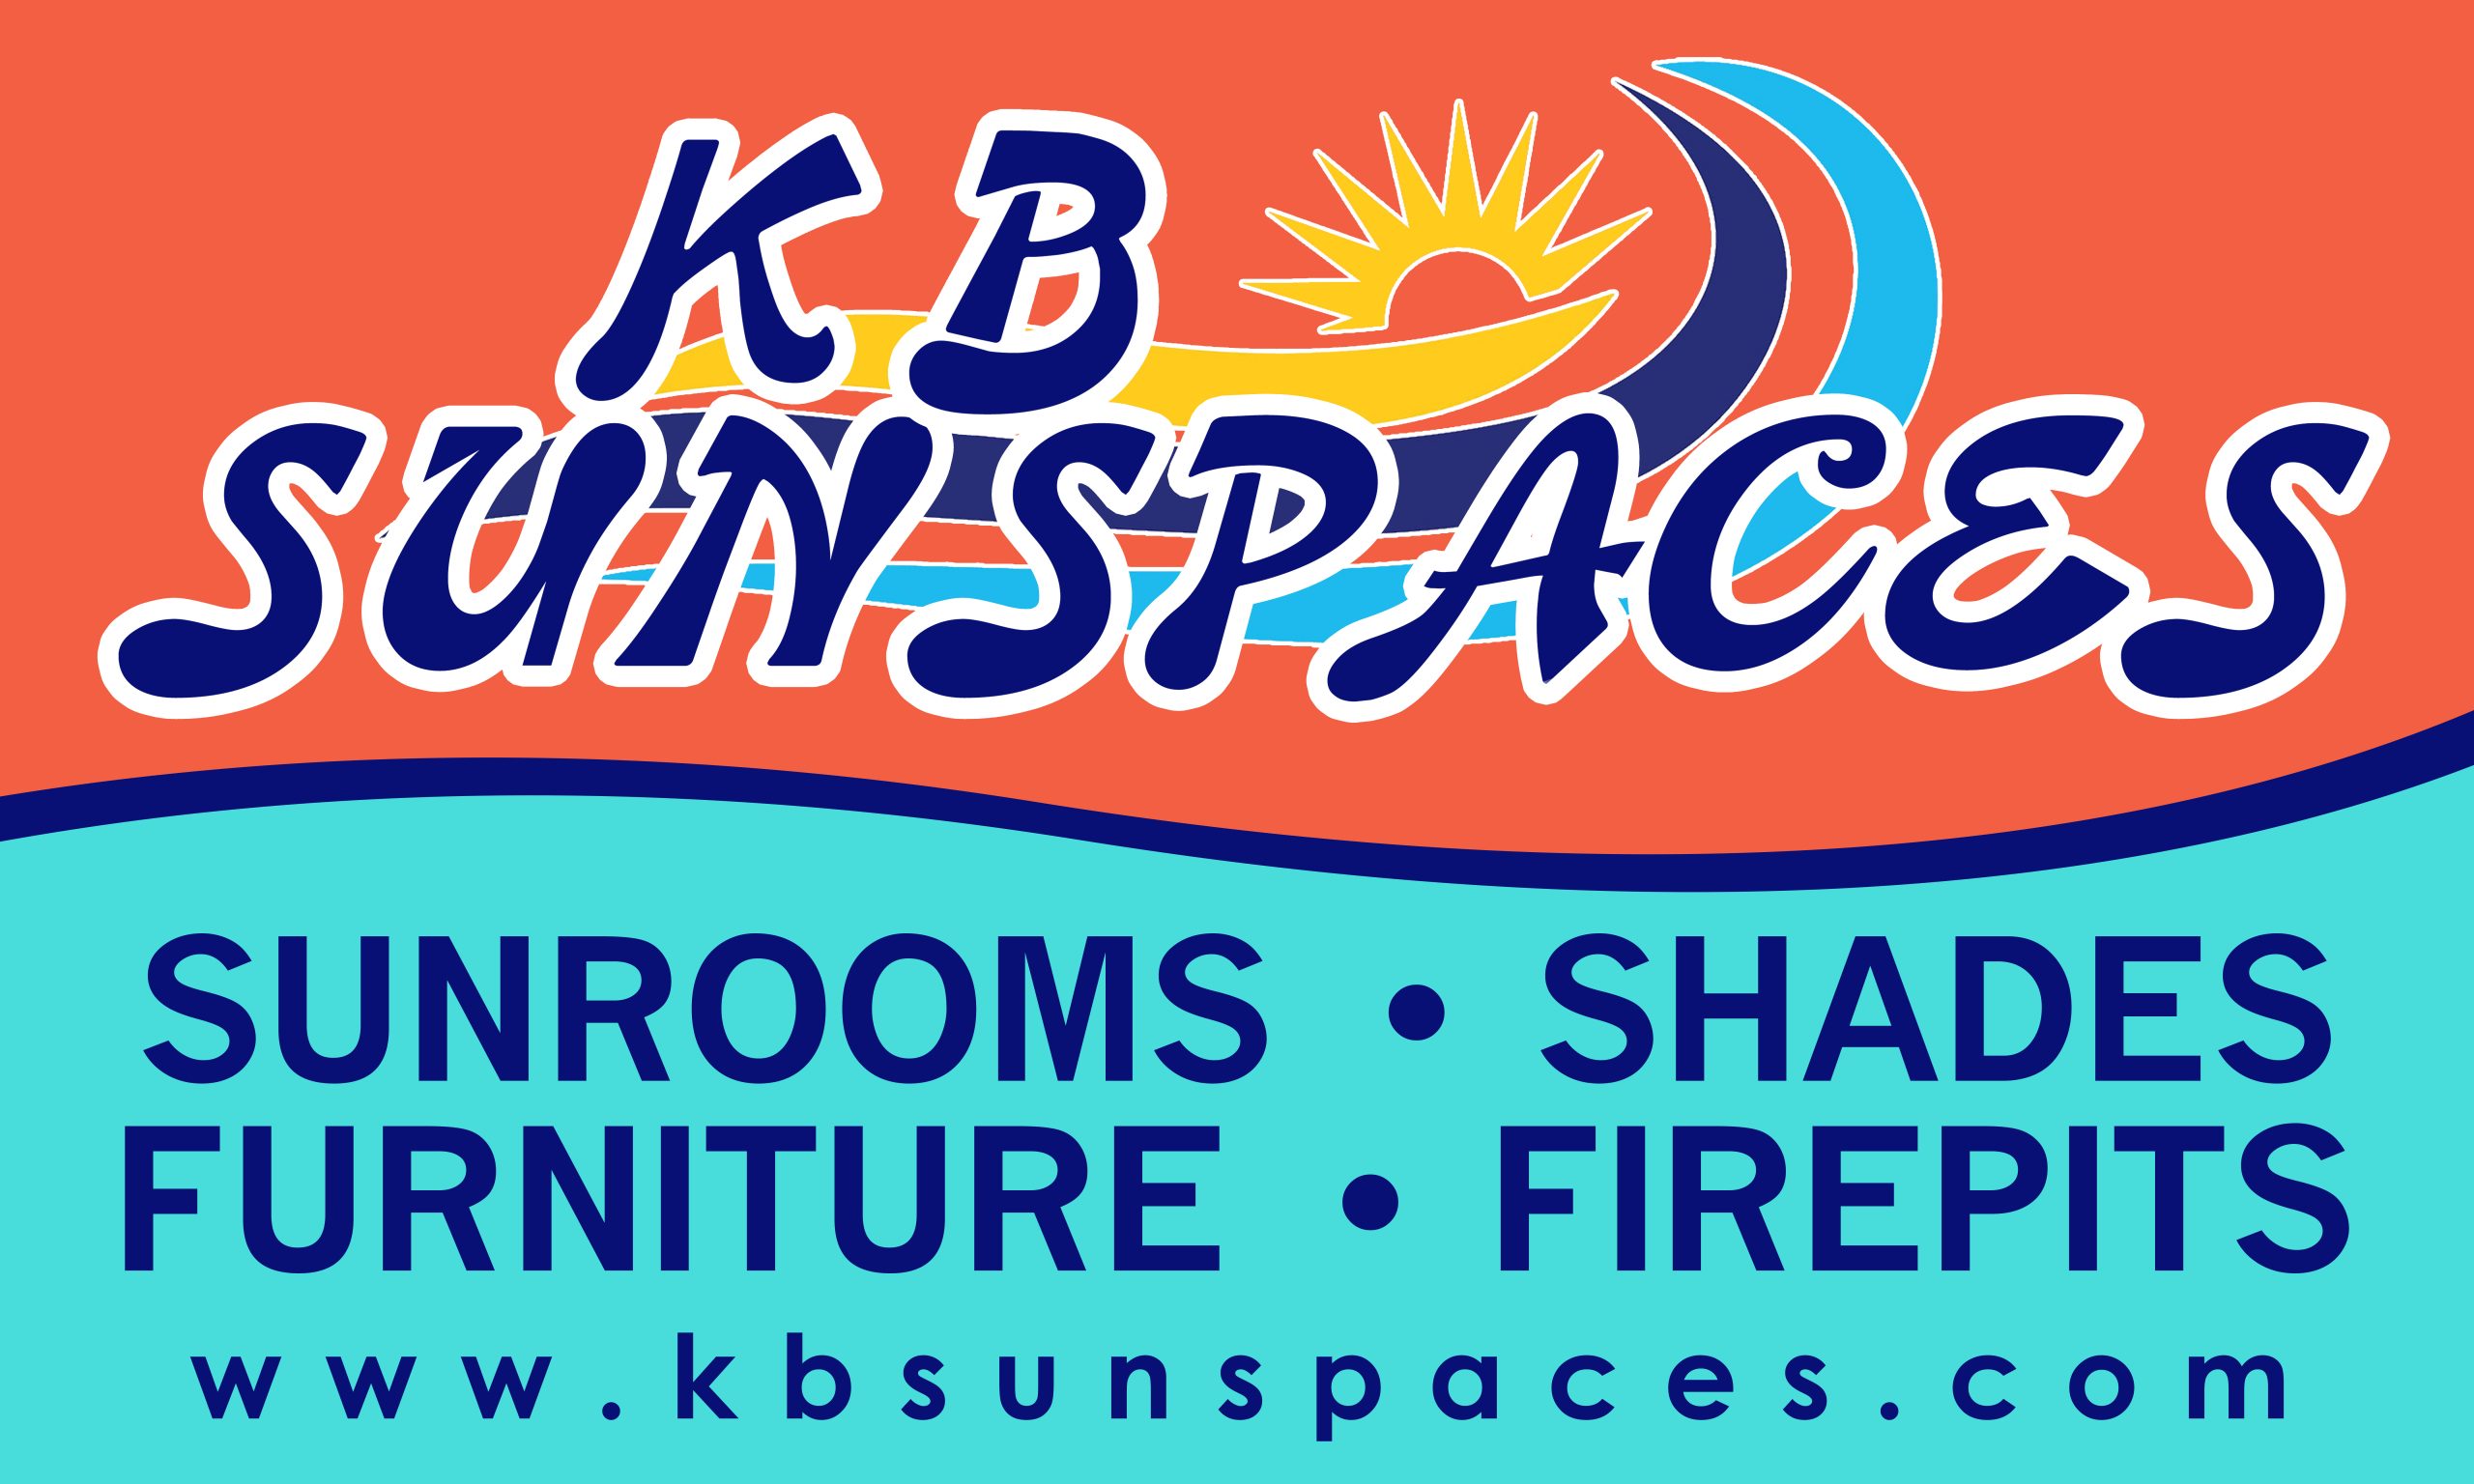 K B Sunspaces